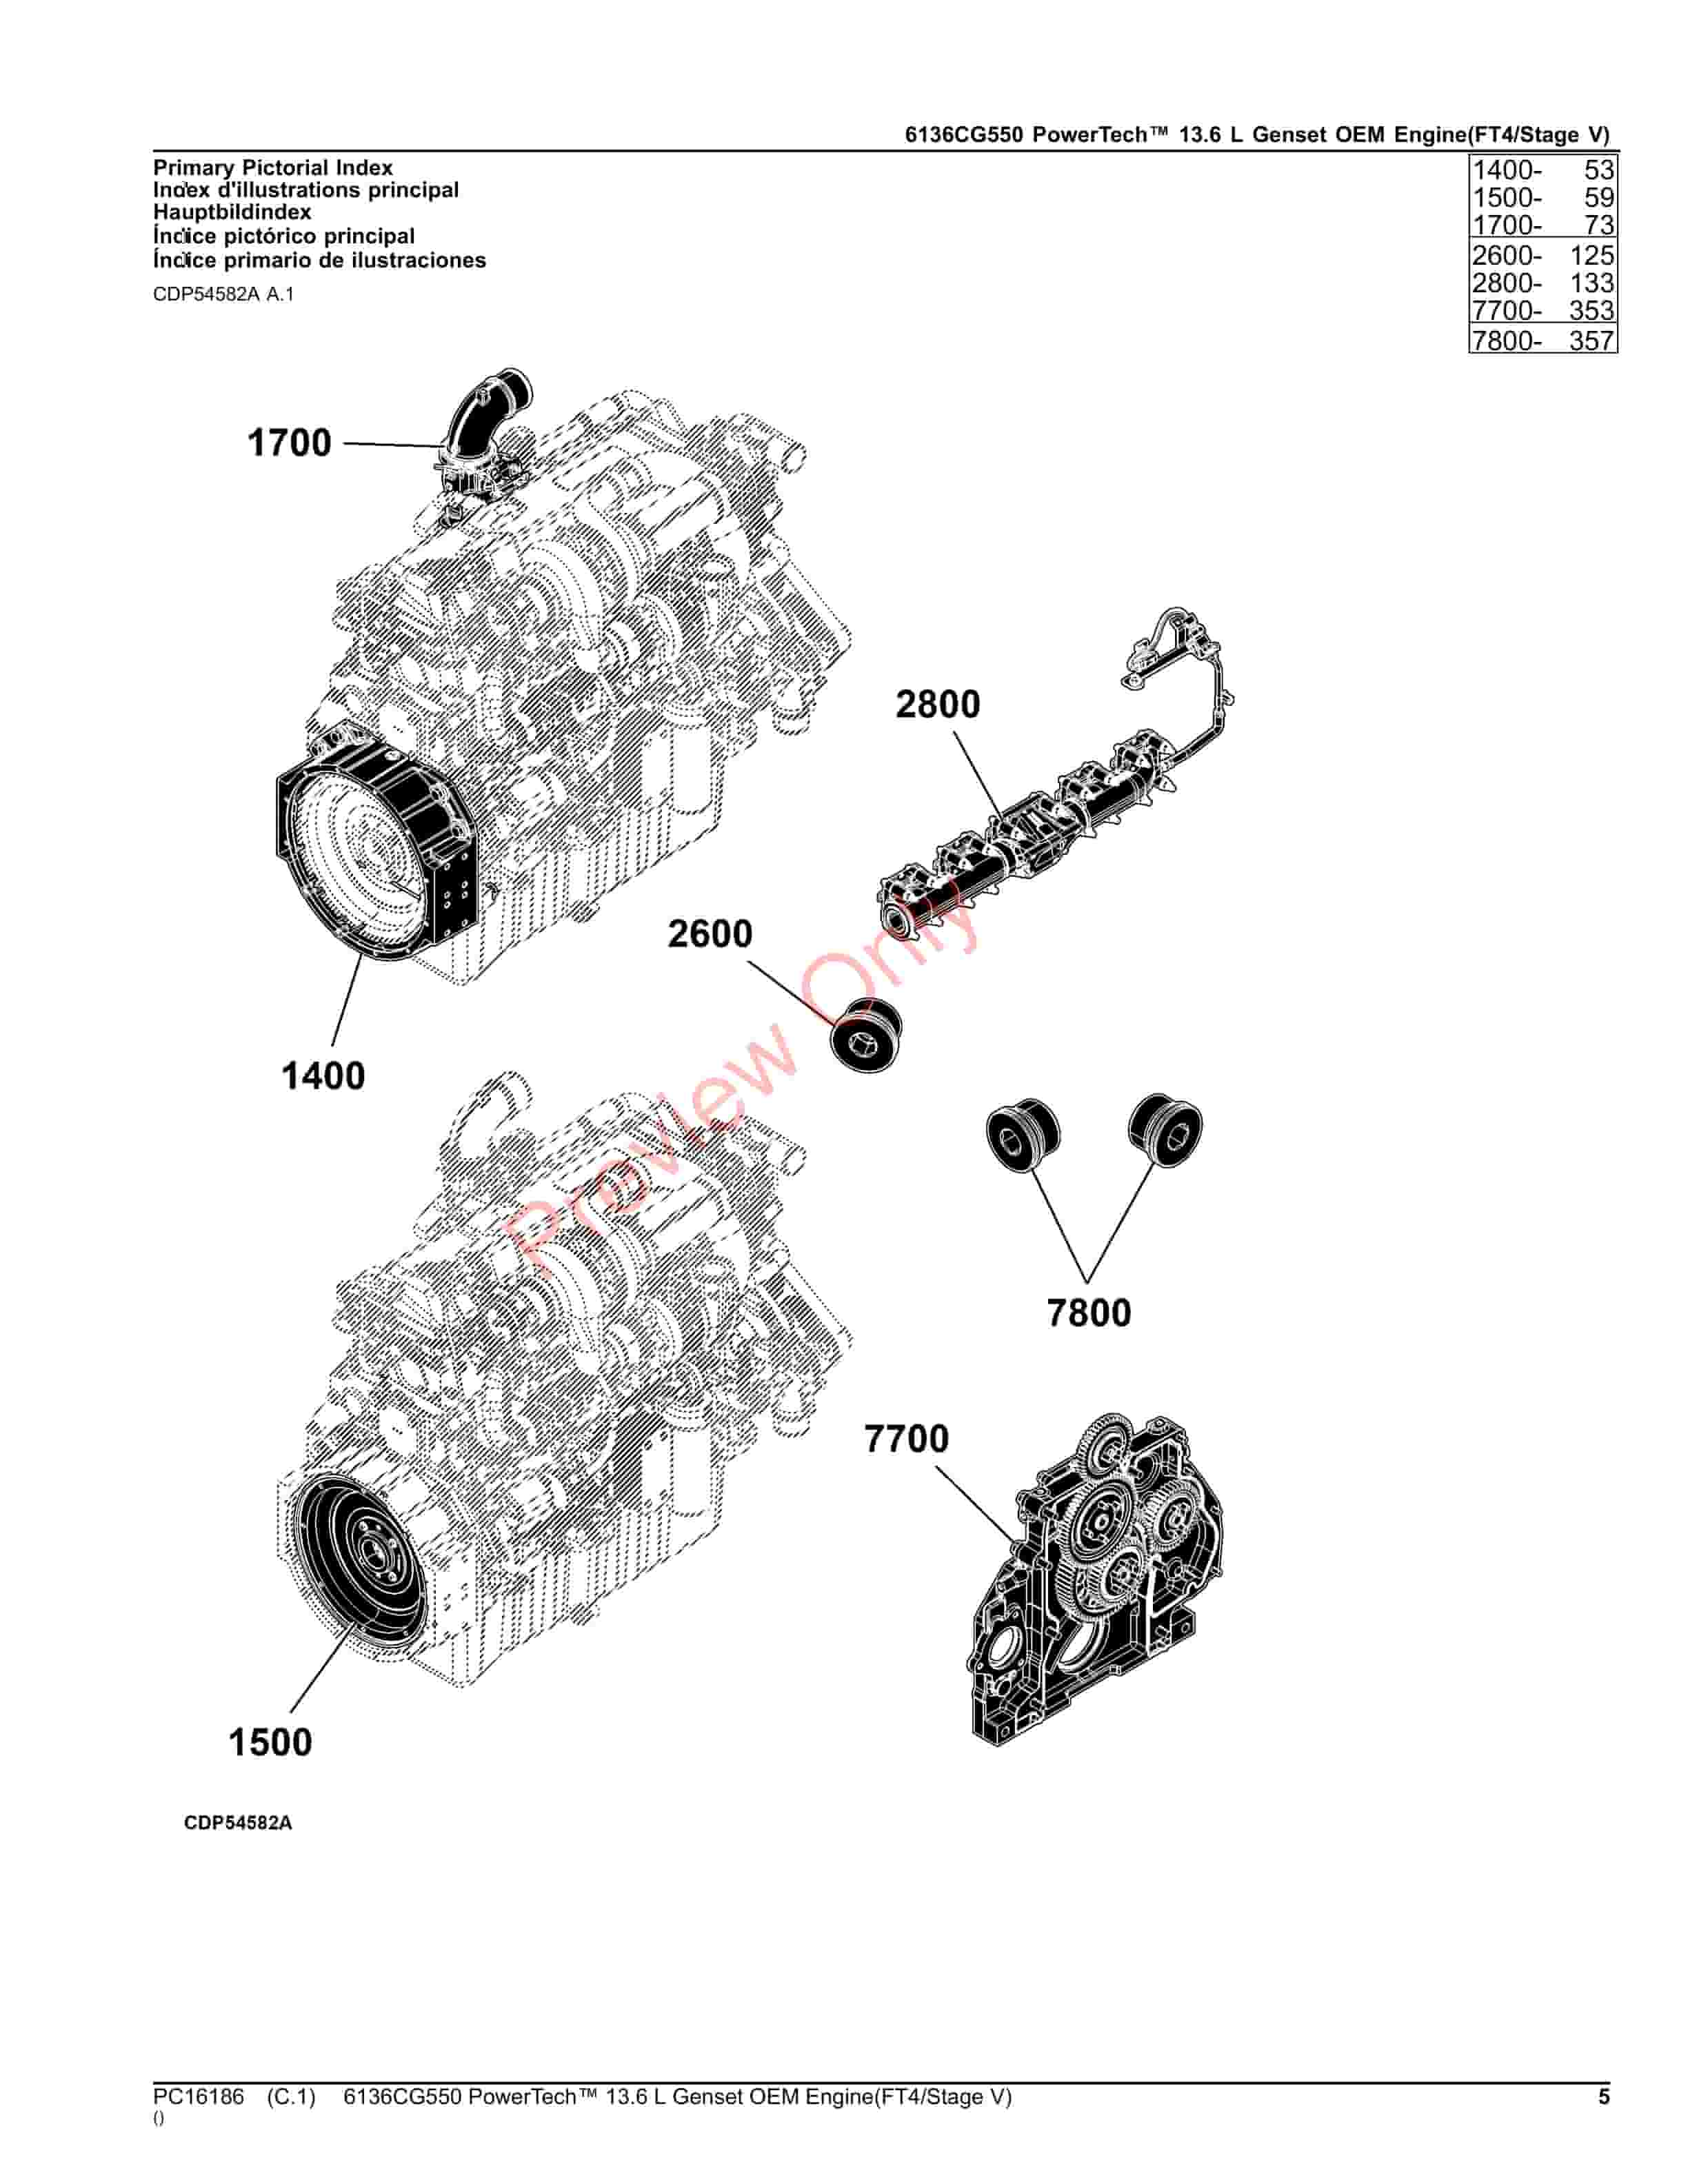 John Deere 6136CG550 PowerTech 13.6 L Genset OEM Engine(FT4Stage V) Parts Catalog PC16186 20JUL23-5